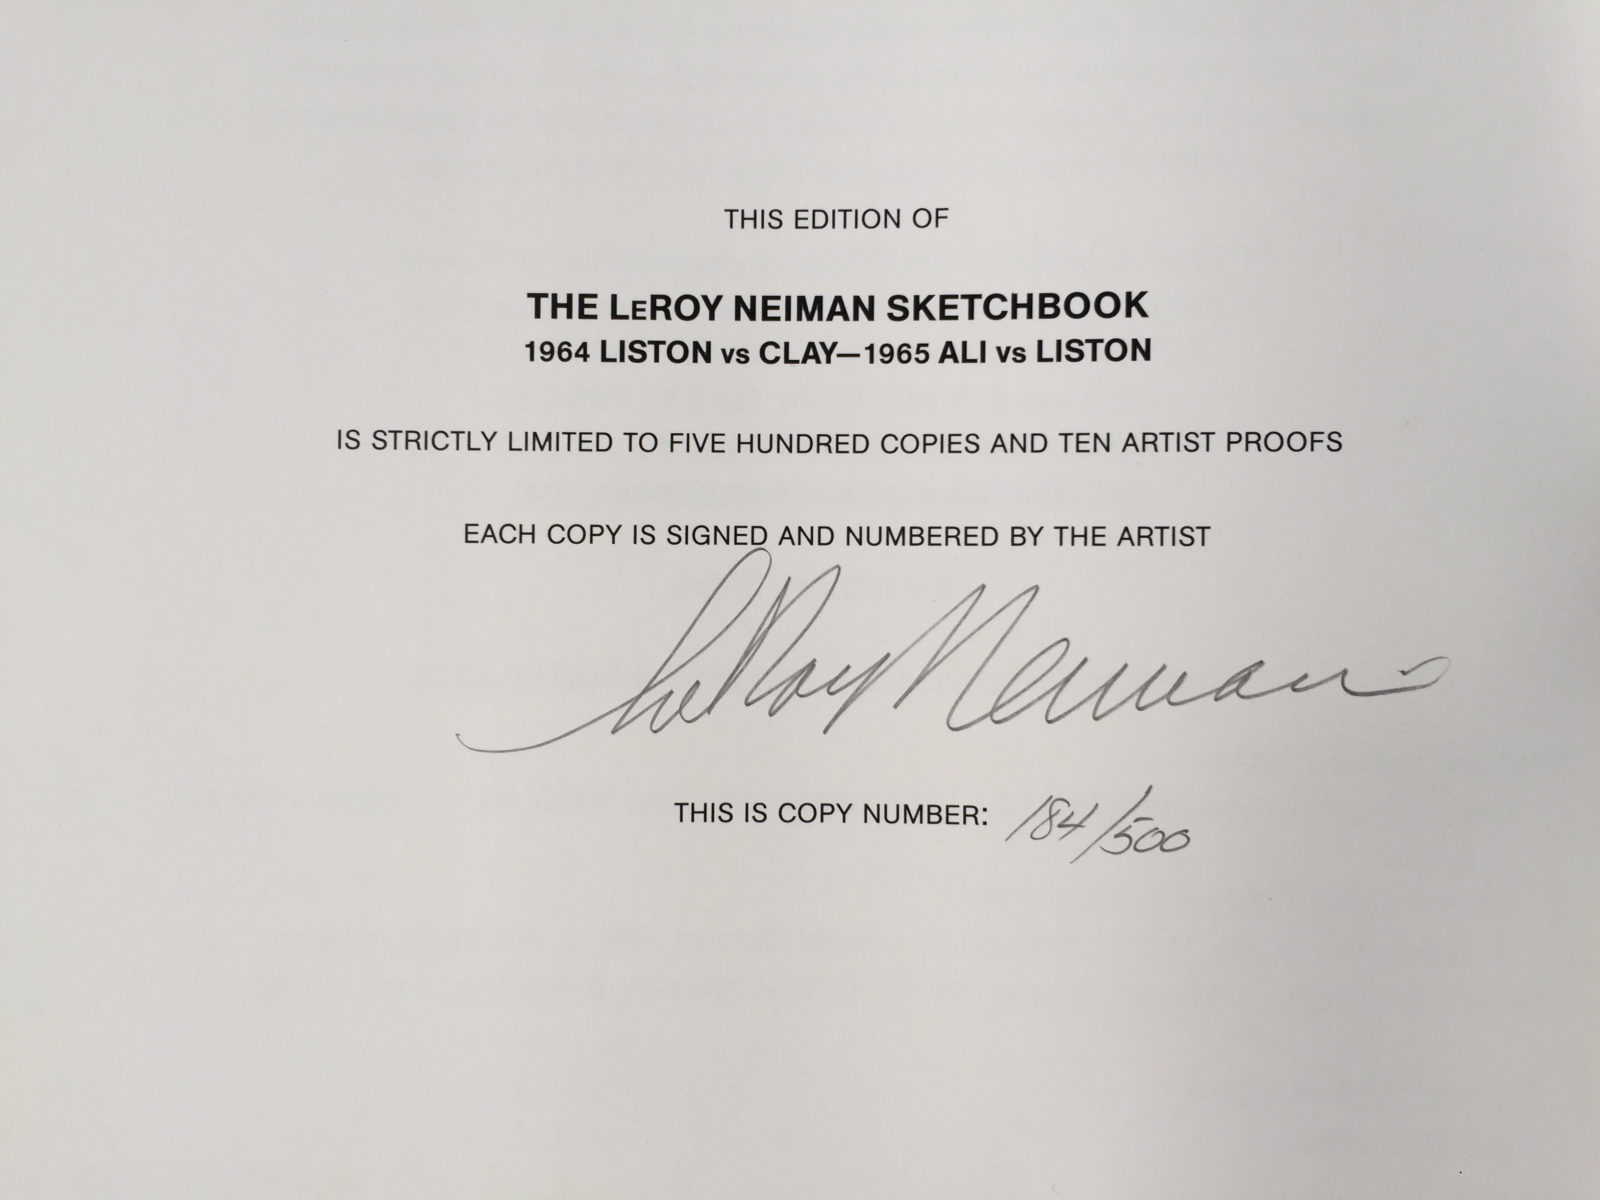 Copy 184/500 of The LeRoy Neiman Sketchbook: 1964 Liston vs. Clay, 1965 Ali vs. Liston